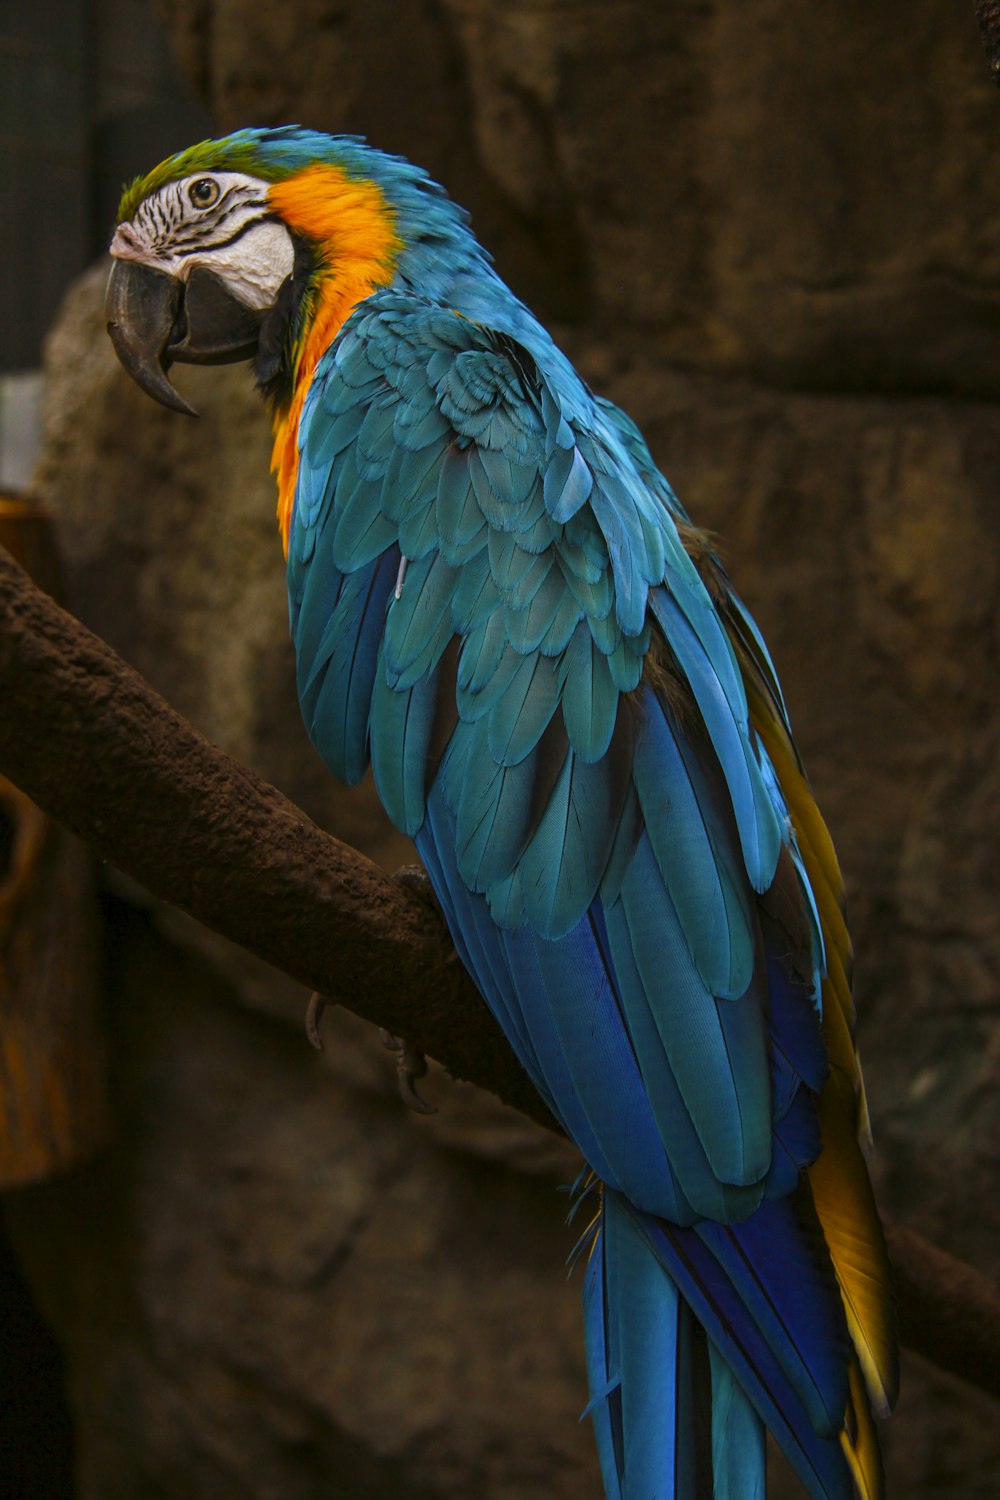 Black Parrot Pictures | Download Free Images on Unsplash